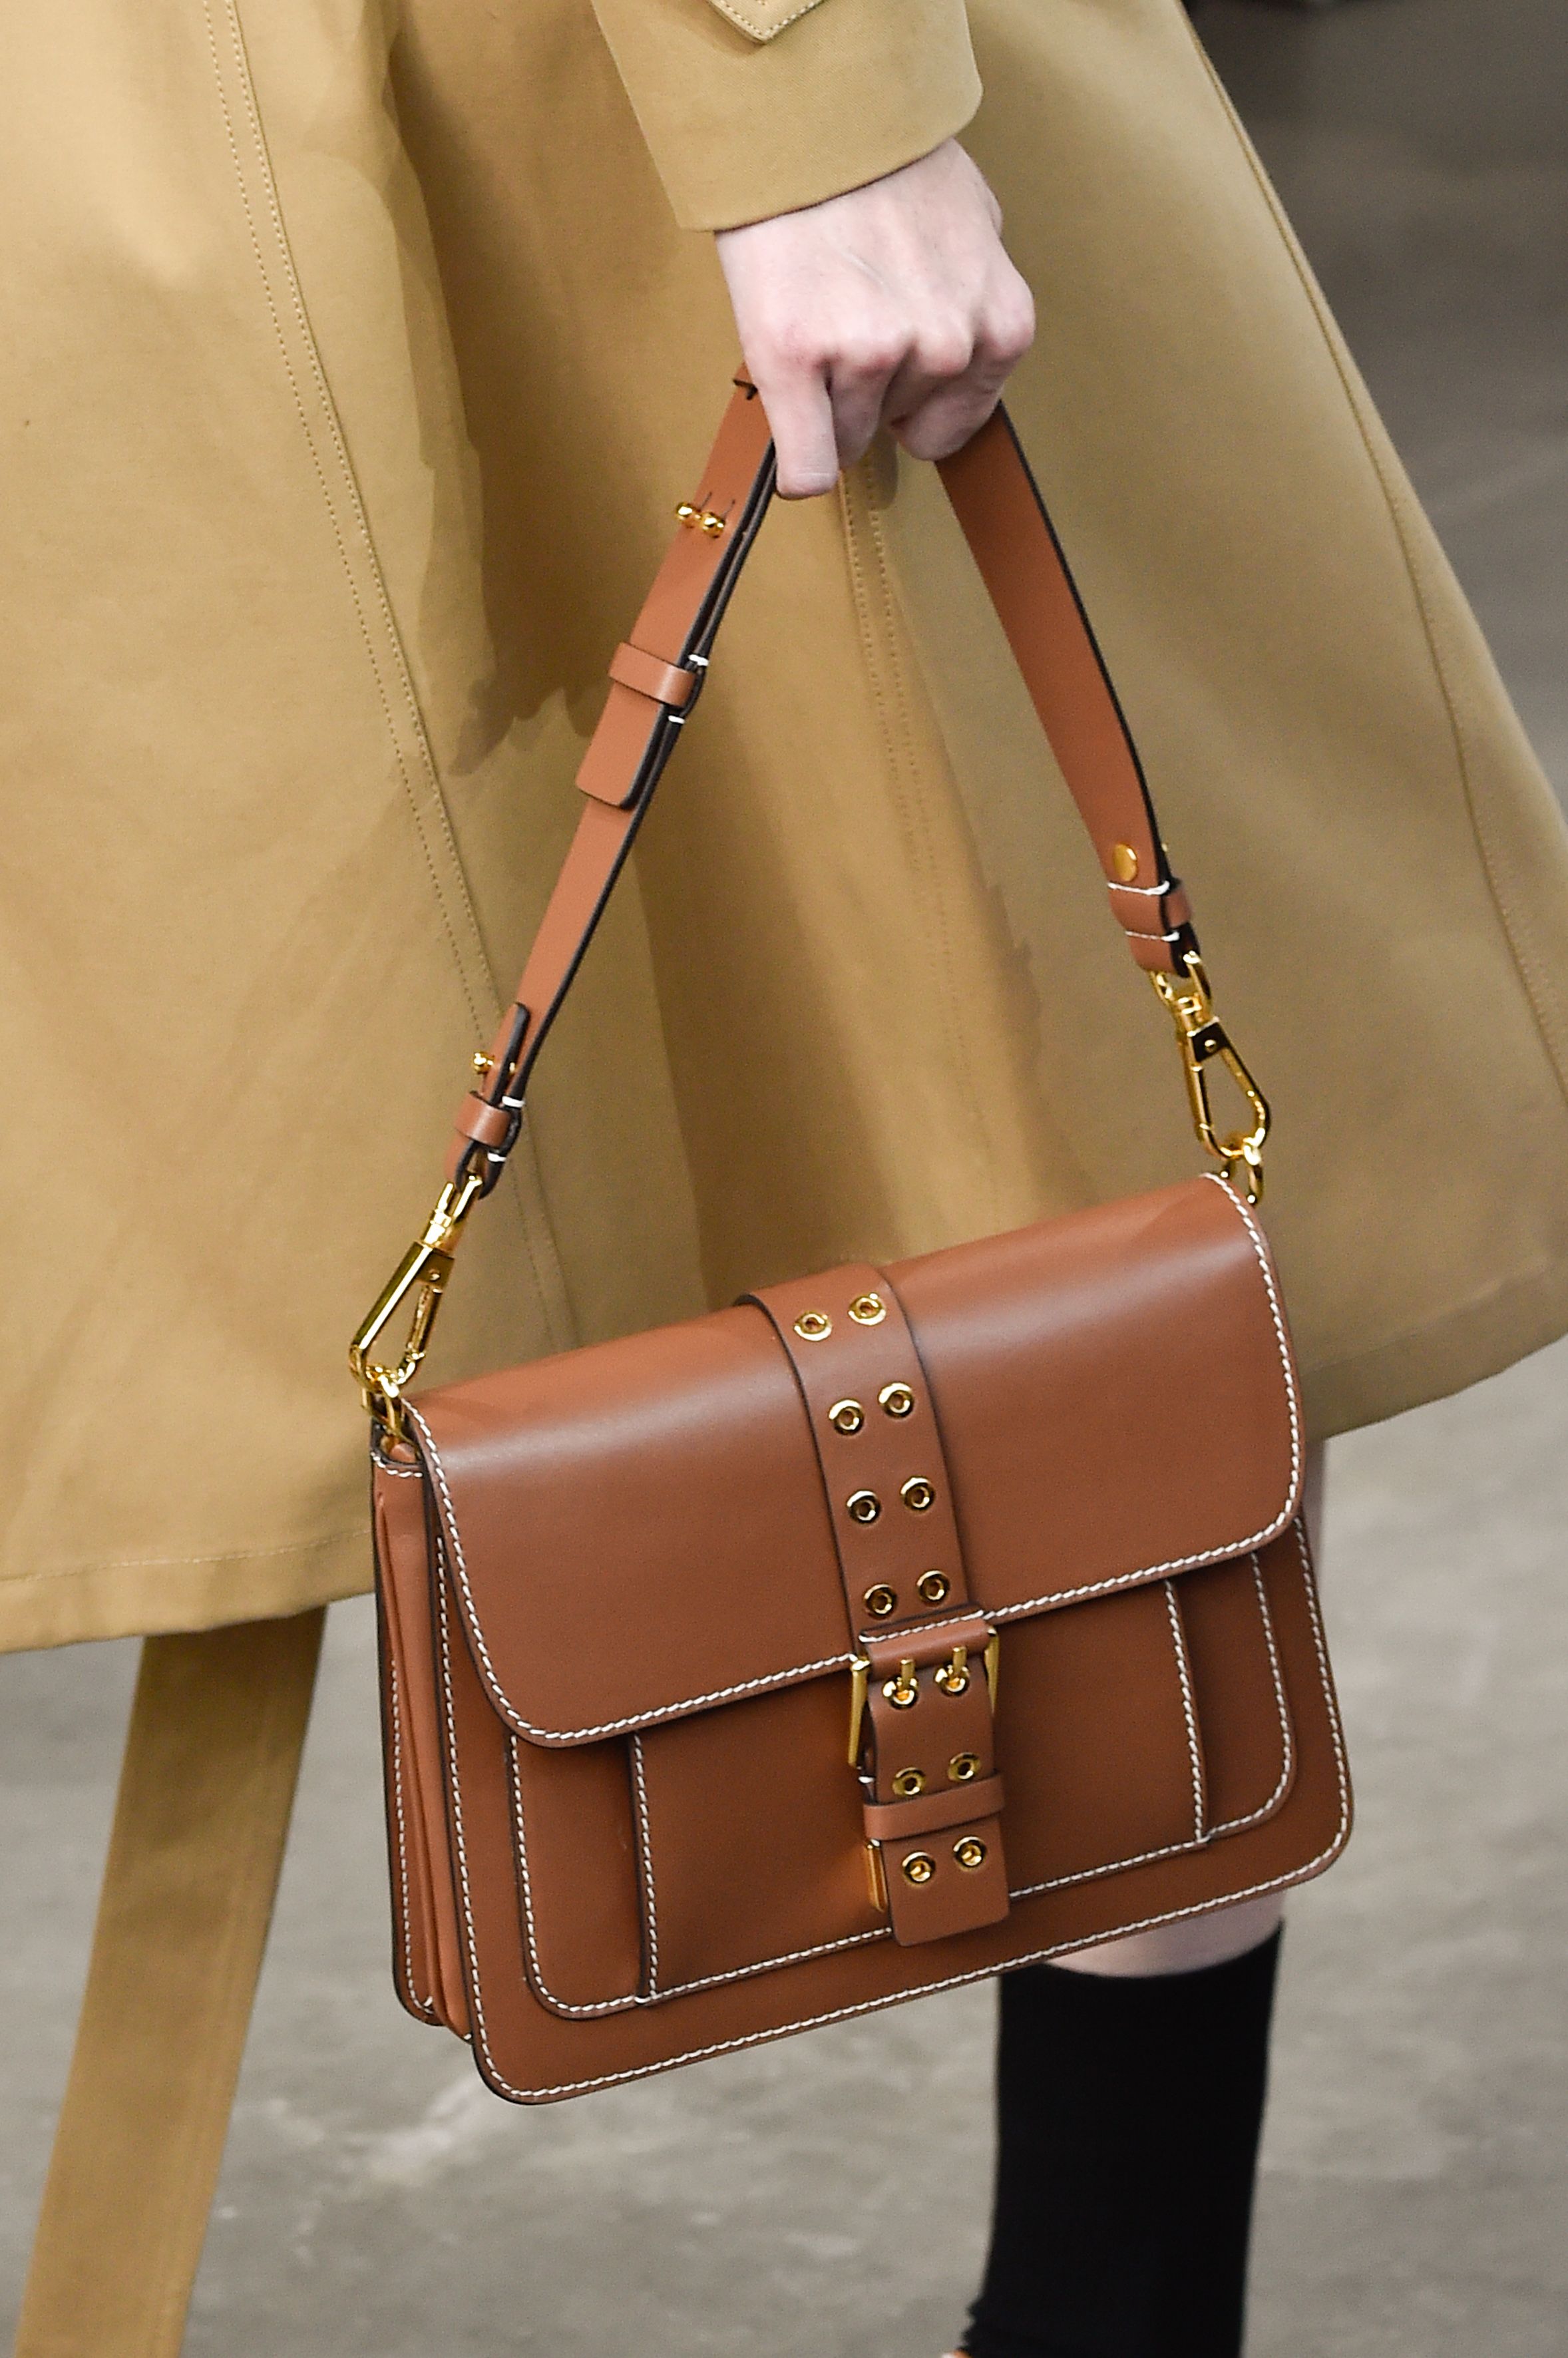 LBYMYB Fashion Casual Pebbled Leather Shoulder Bag Hand Bag